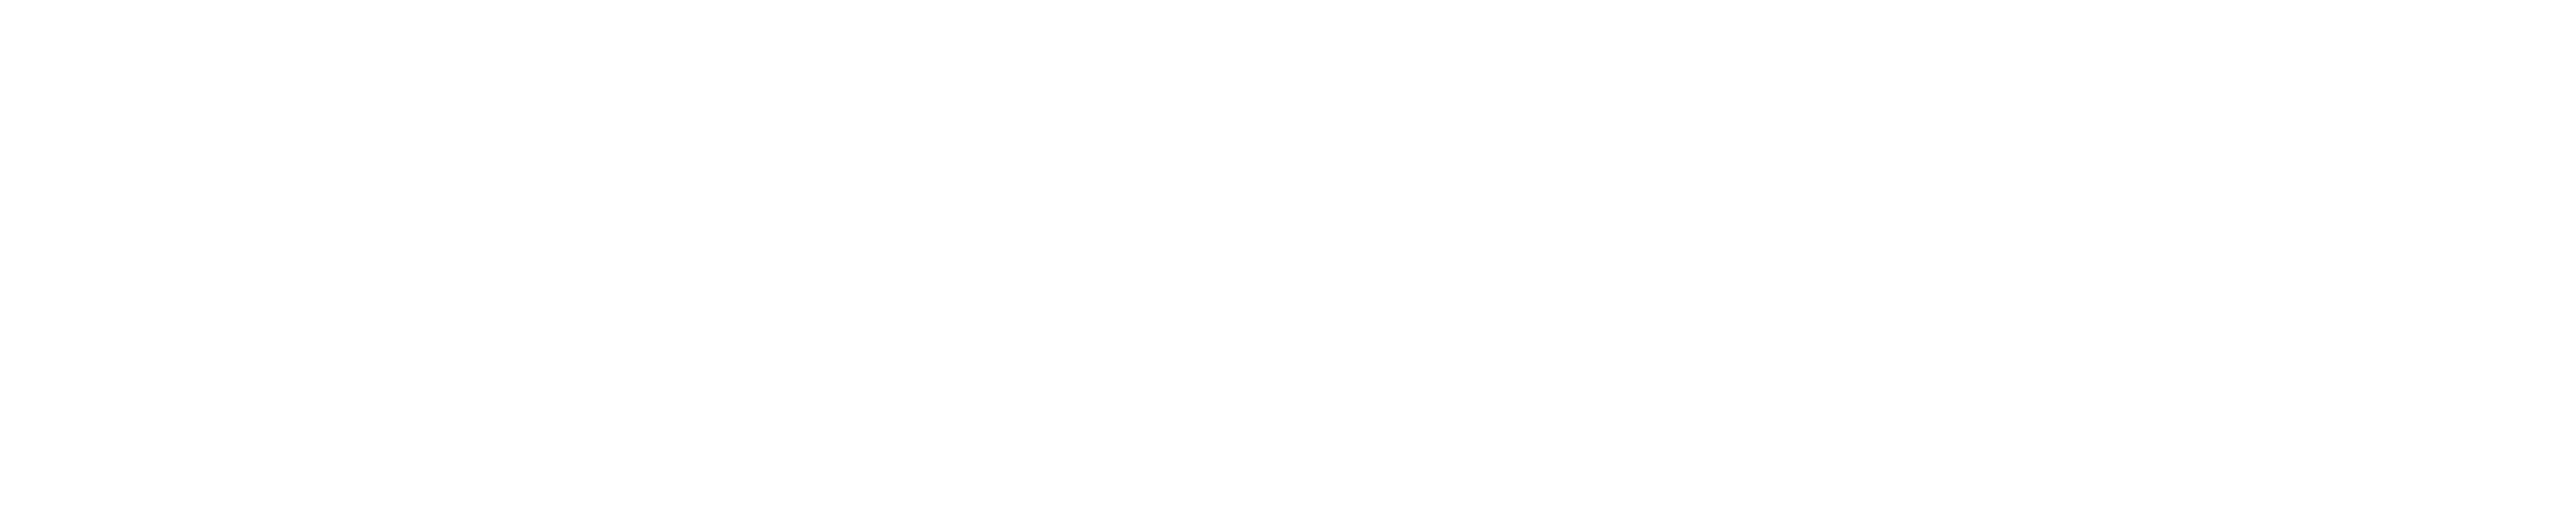 league-logo-trans